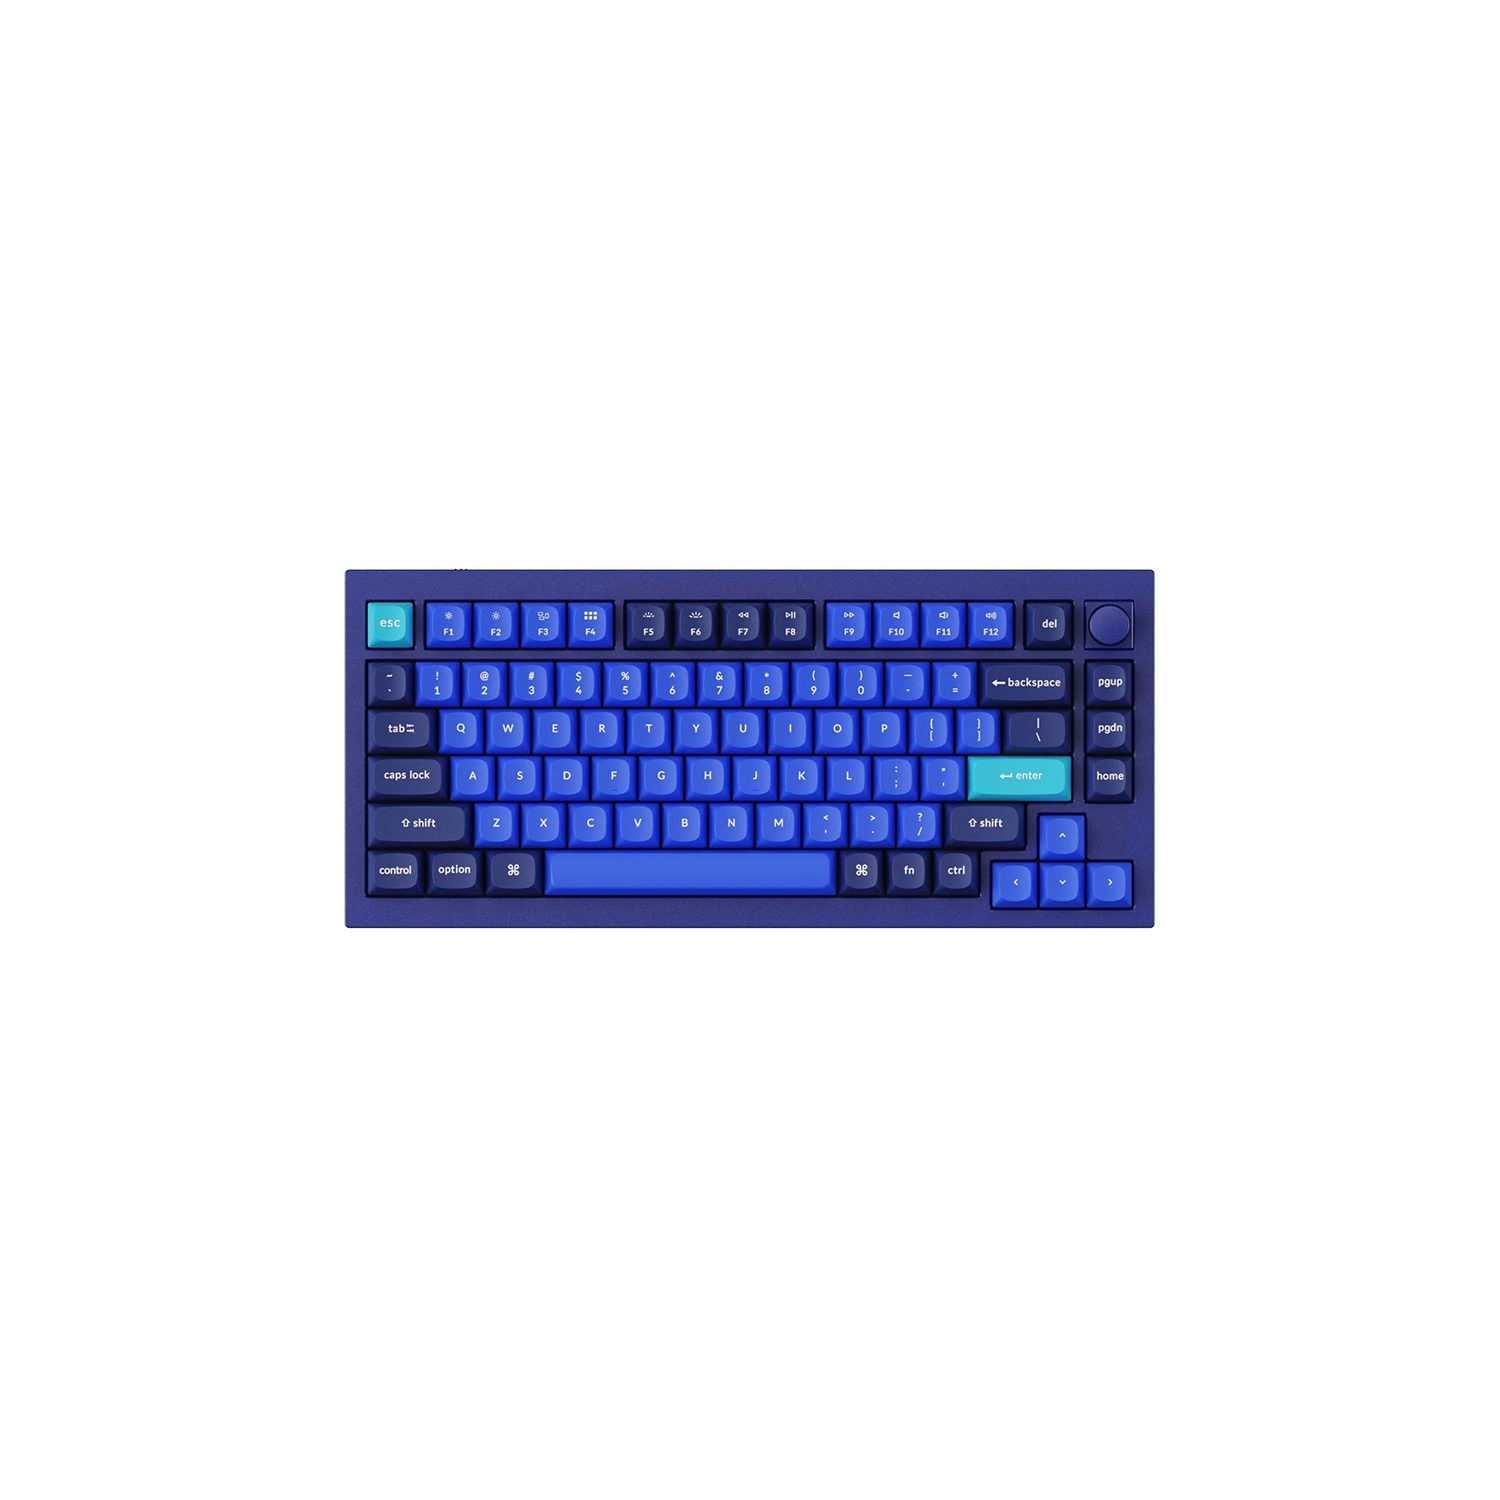 Keychron Q1 V2 Hotswap Mechanica Keyboard - RGB -Aluminum Frame - Blue - with Knob - Gateron Pro Brown - 75% Layout - Windows Mac OS (Q1-O3)